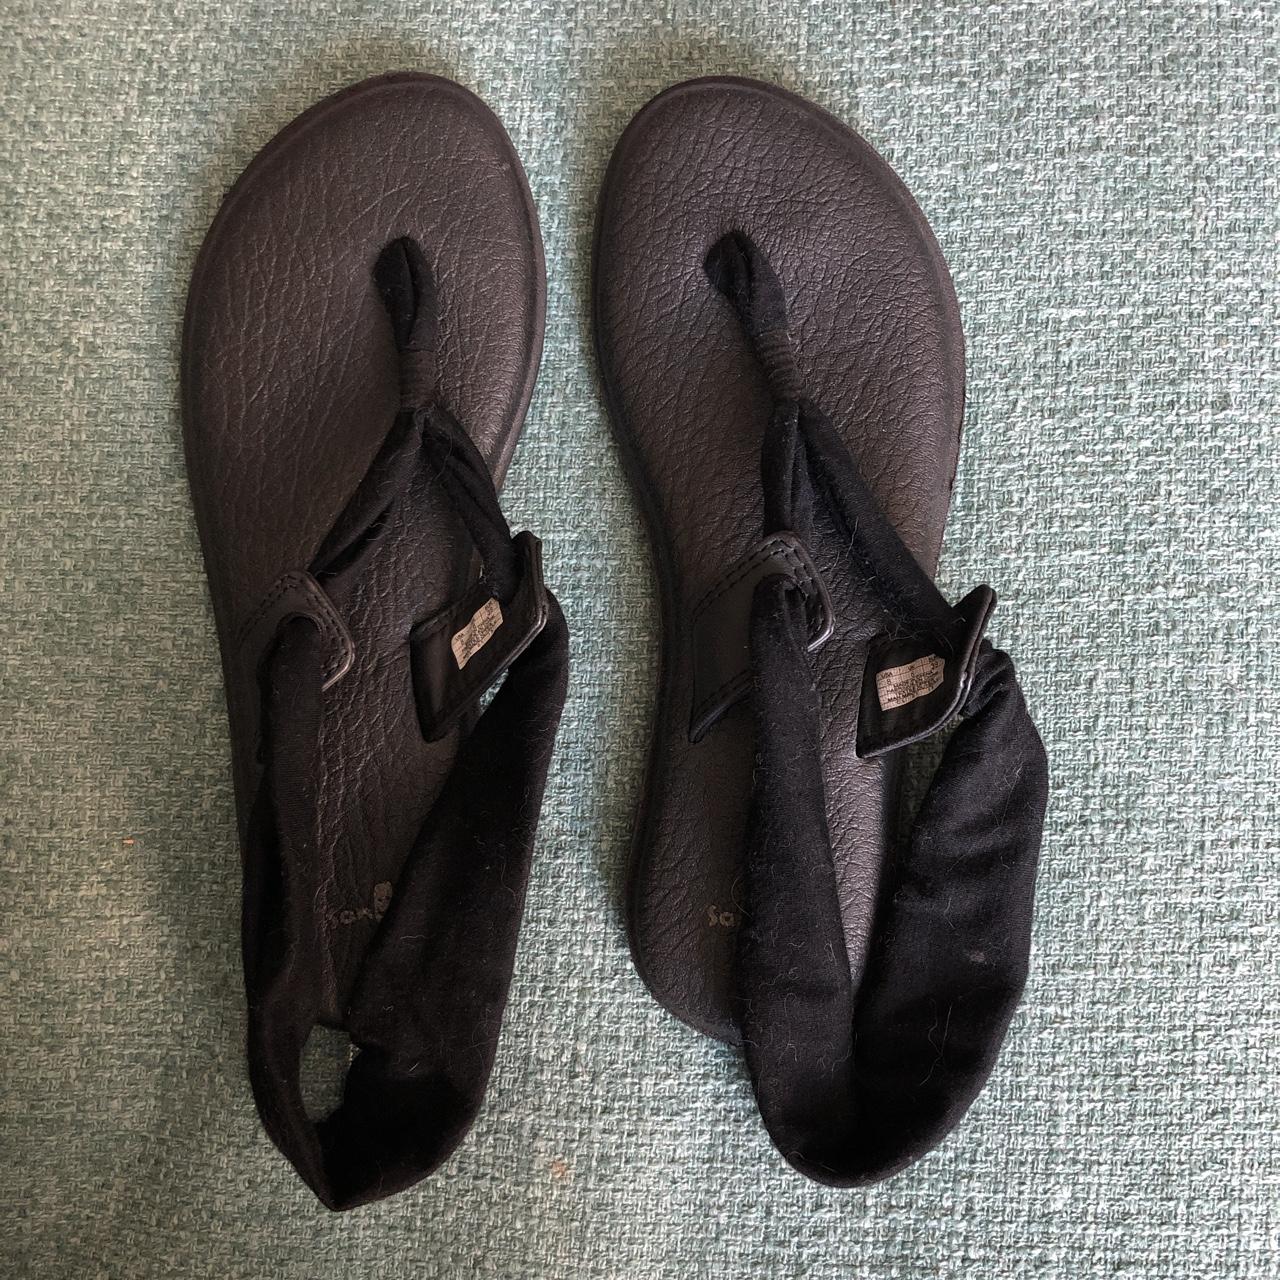 Like new Sanuk ‘yoga sling’ sandals size 8. Only